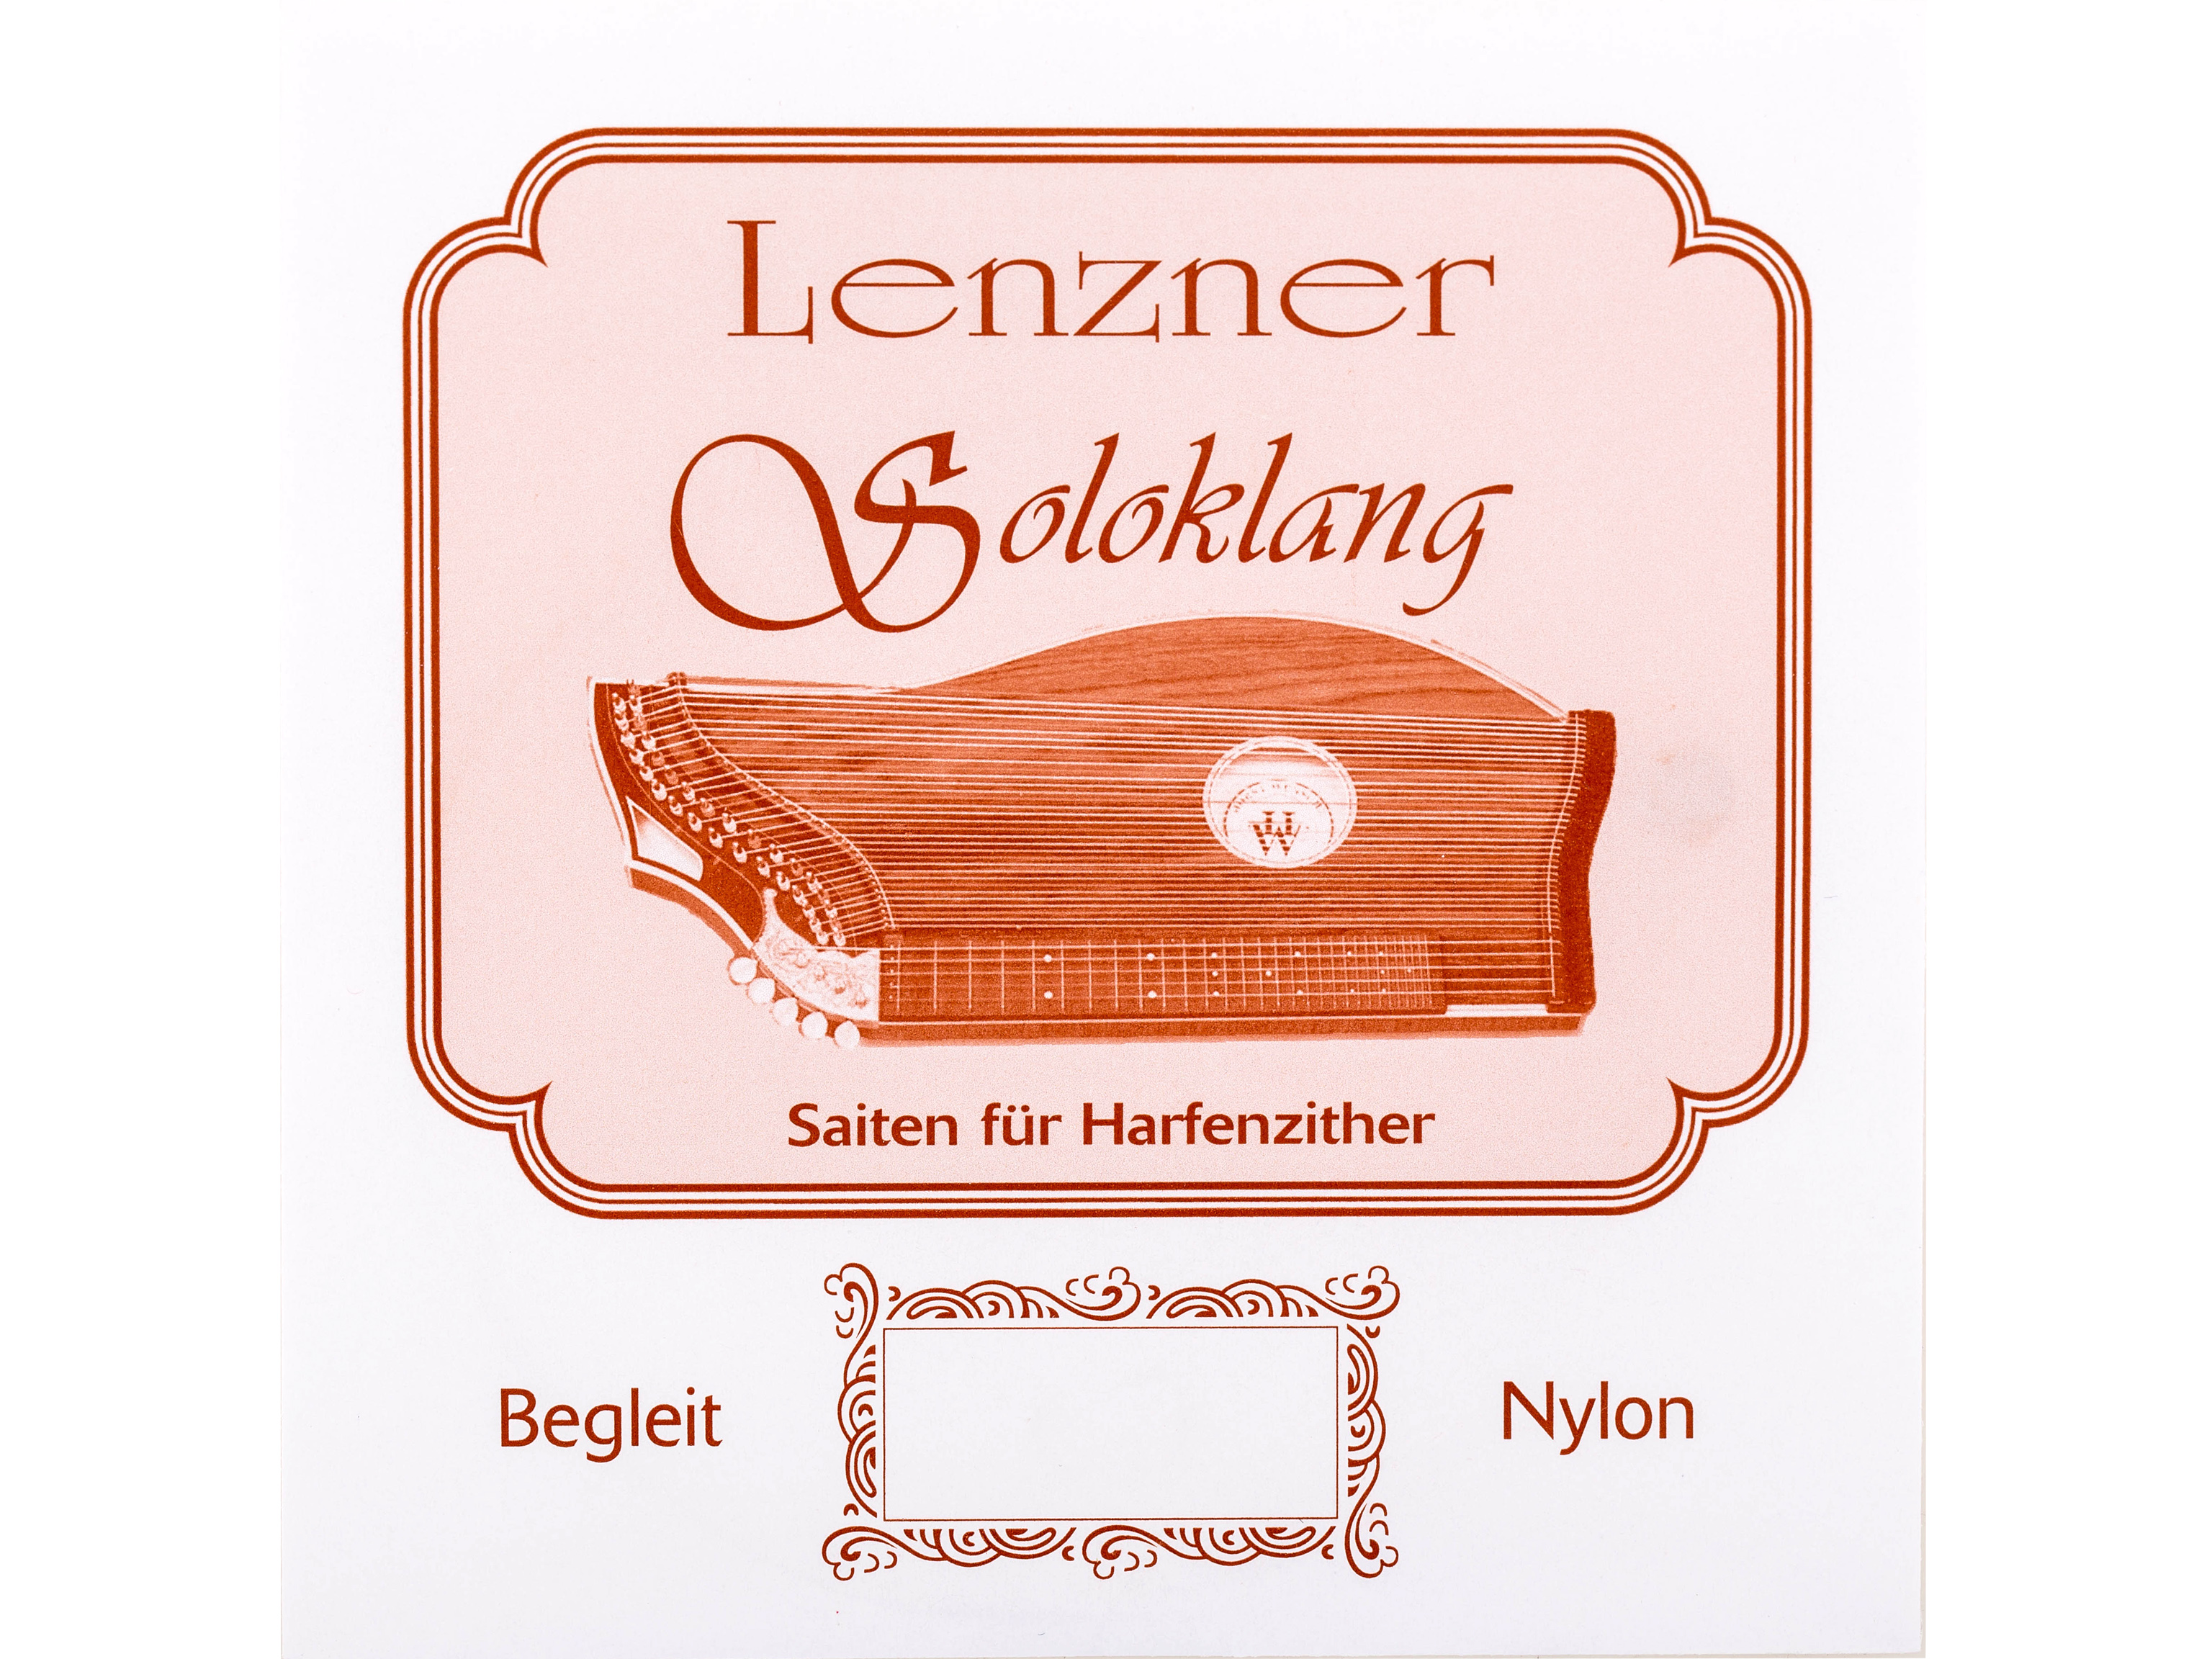 Lenzner 10. fis Zithersaite Soloklang Begleit